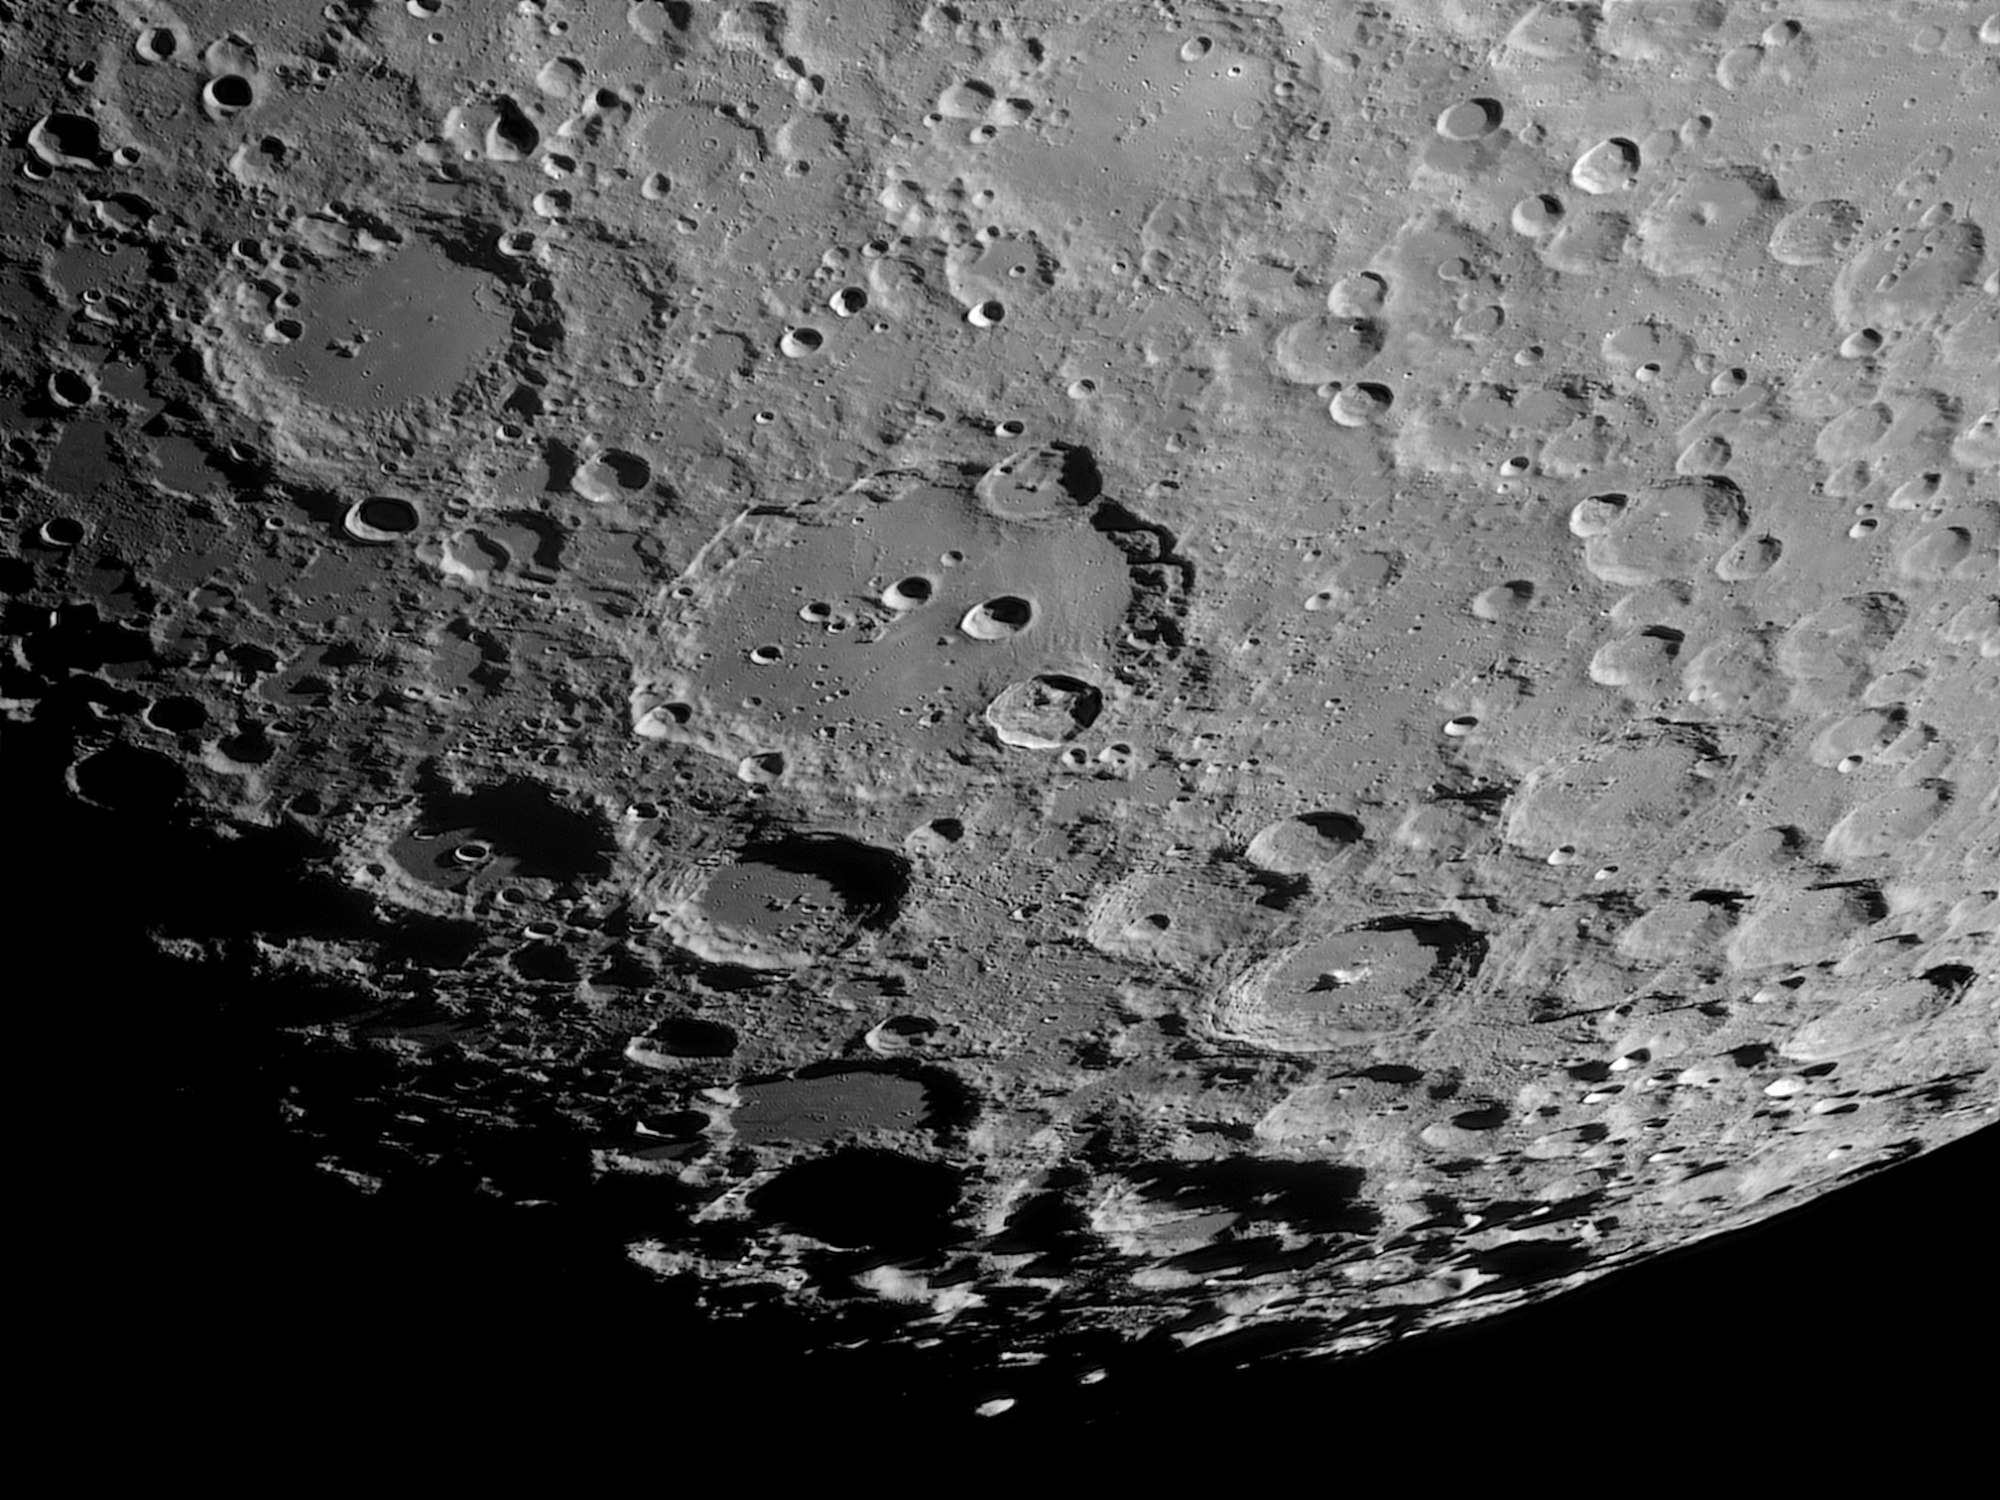 Lune-20210323_Clavius-baV-180.thumb.jpg.858ceacd40bc34dfdd41464b60247582.jpg